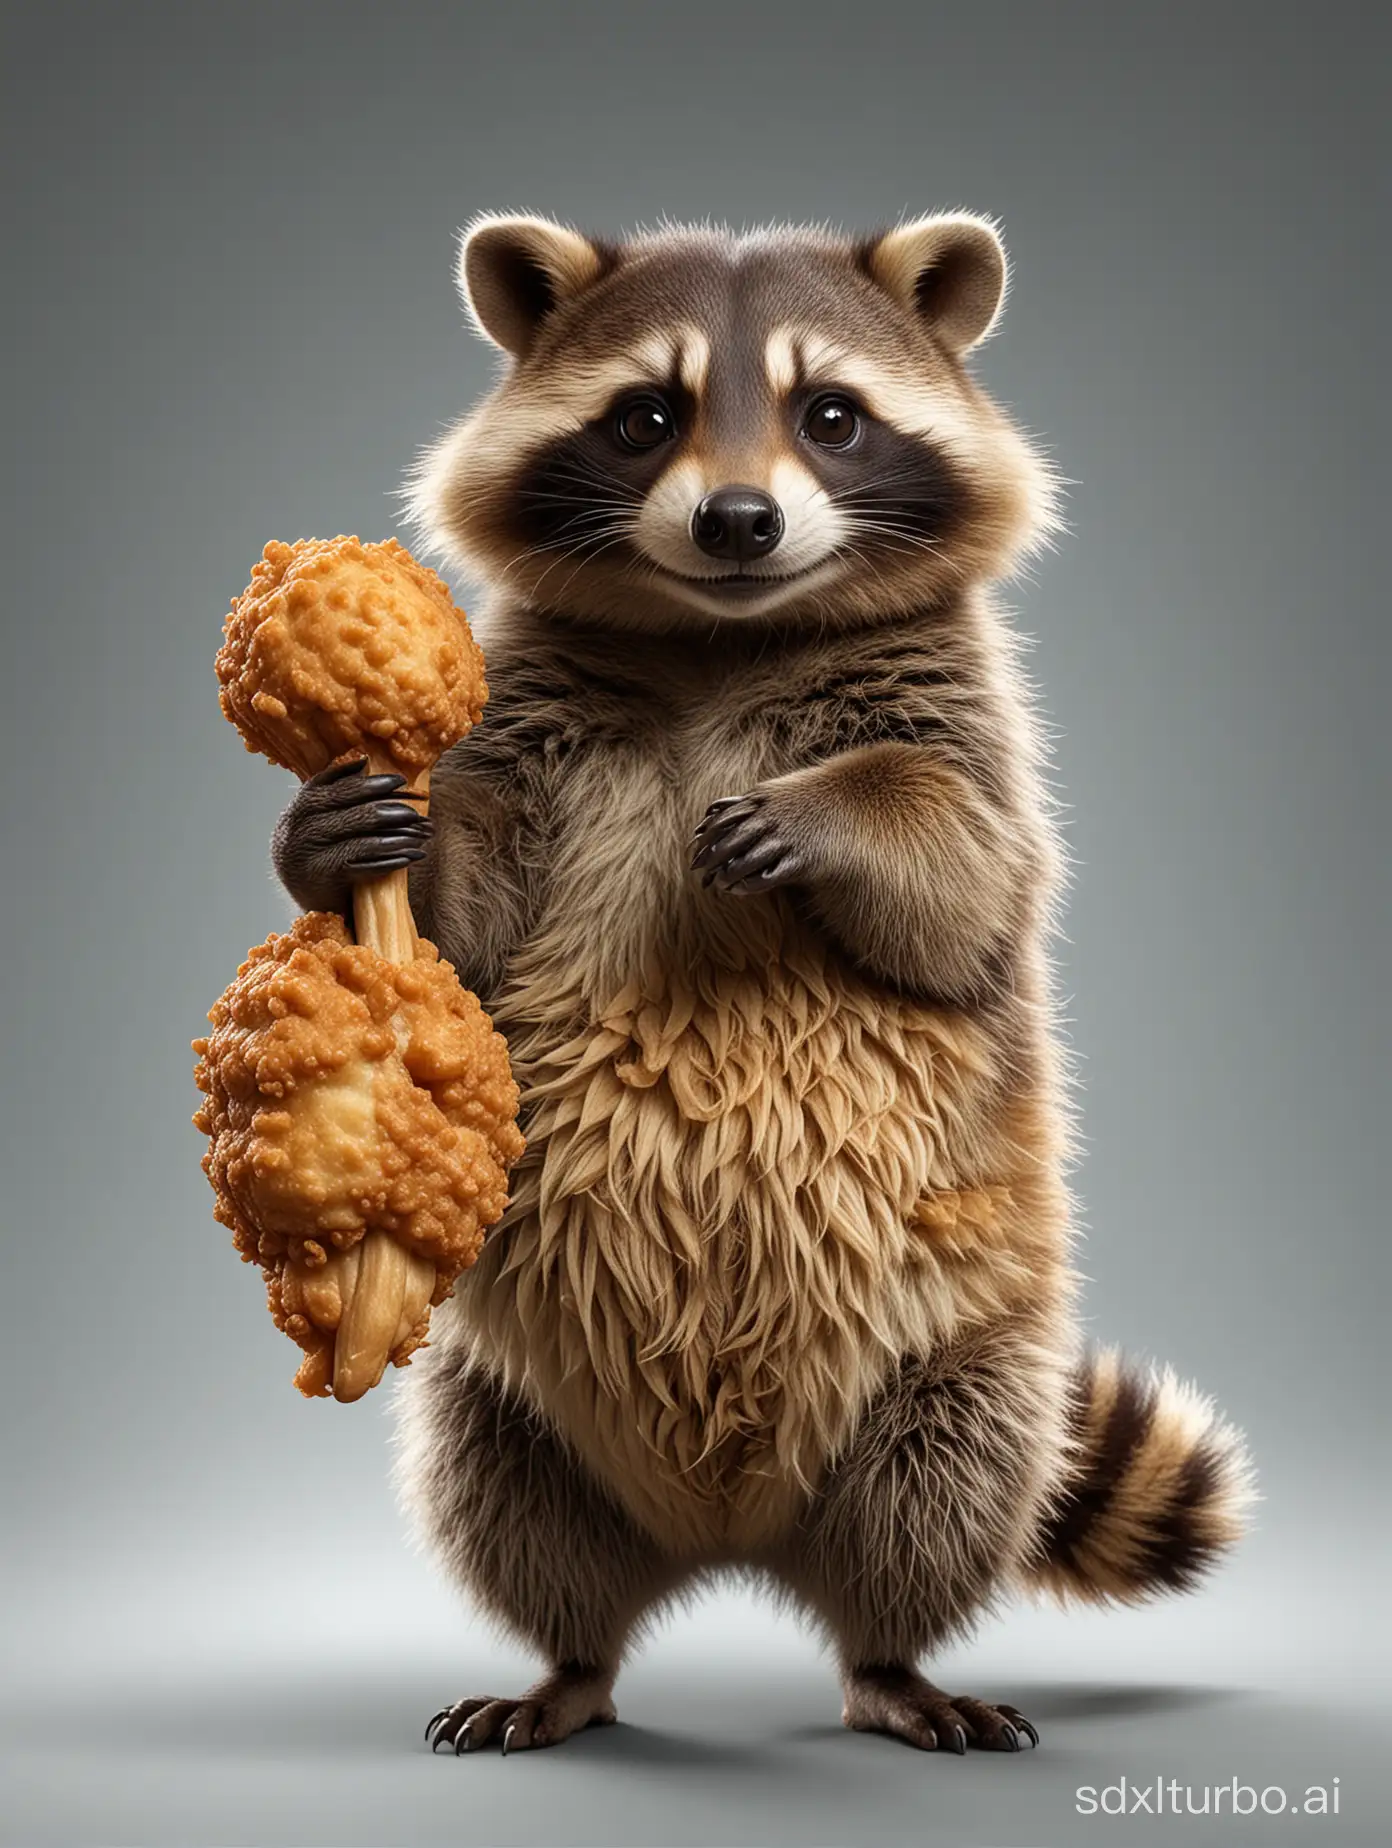 Adorable-Chubby-Raccoon-Enjoying-a-Crispy-Chicken-Drumstick